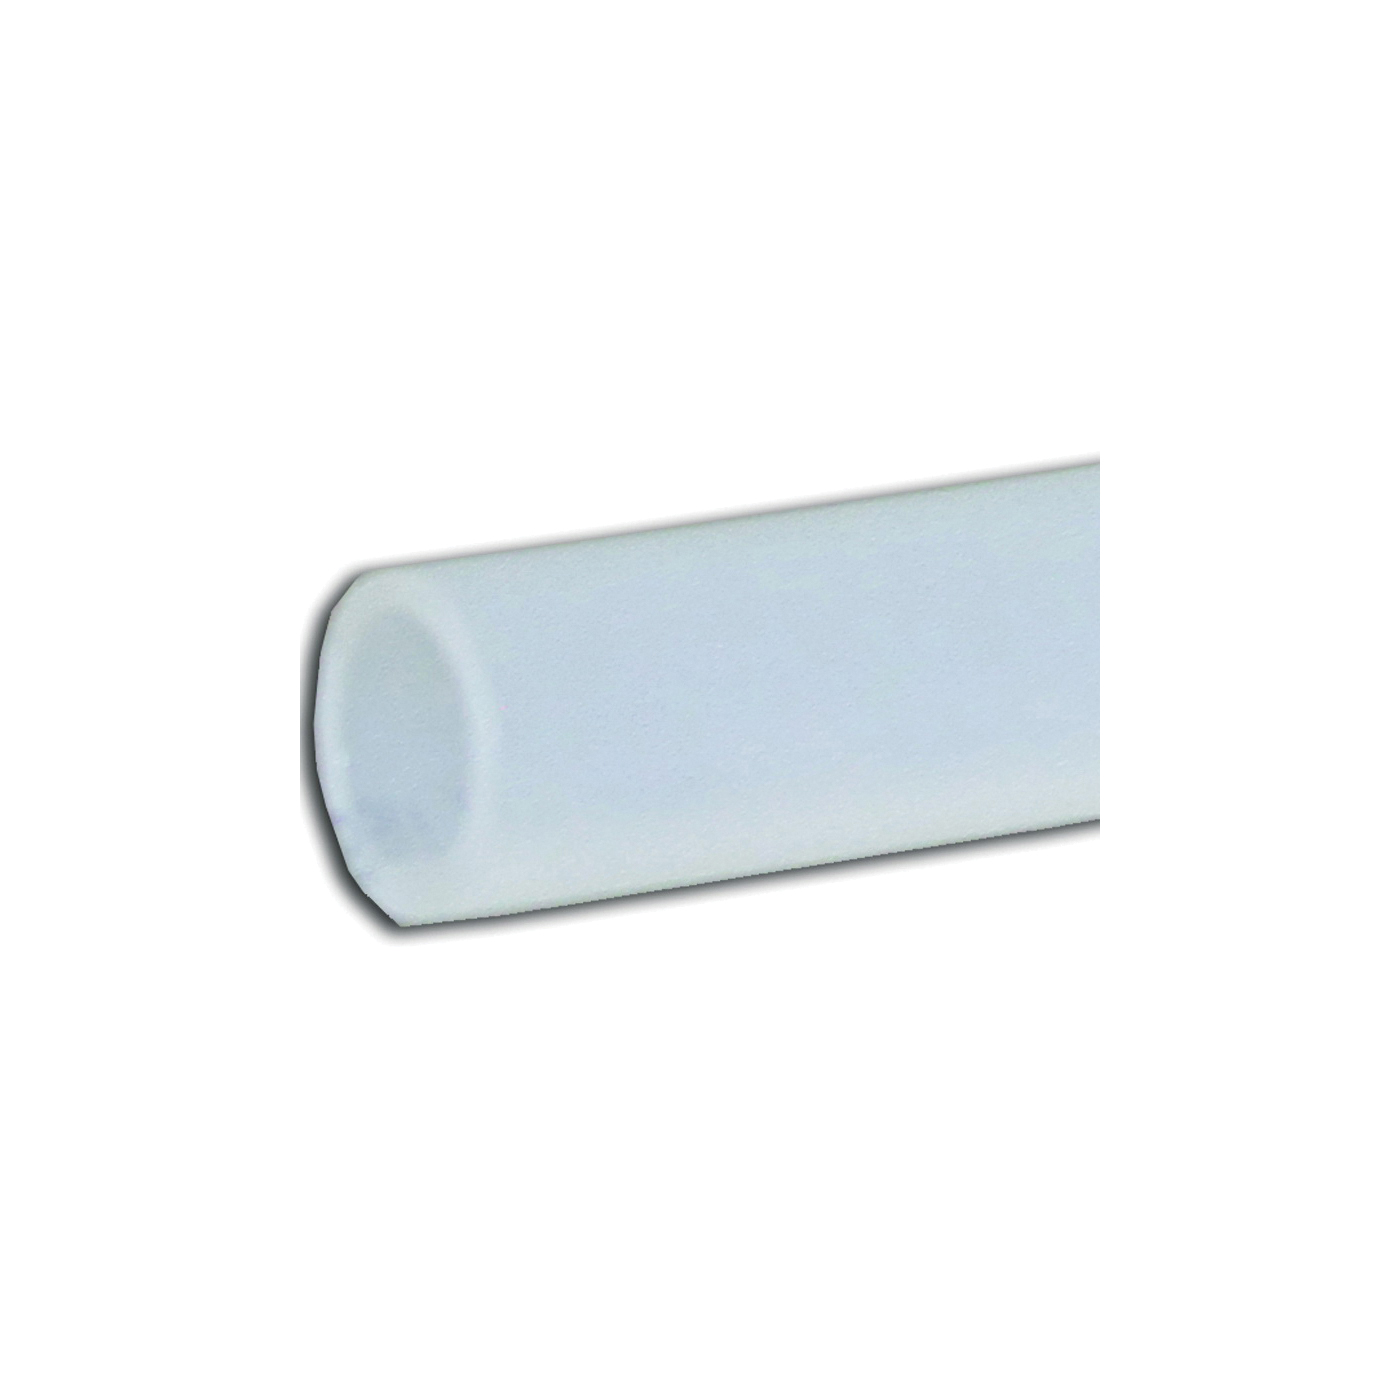 Abbott Rubber T16 Series T16004001/9001P Pipe Tubing, 1/2 in, Plastic, Translucent Milky White, 100 ft L